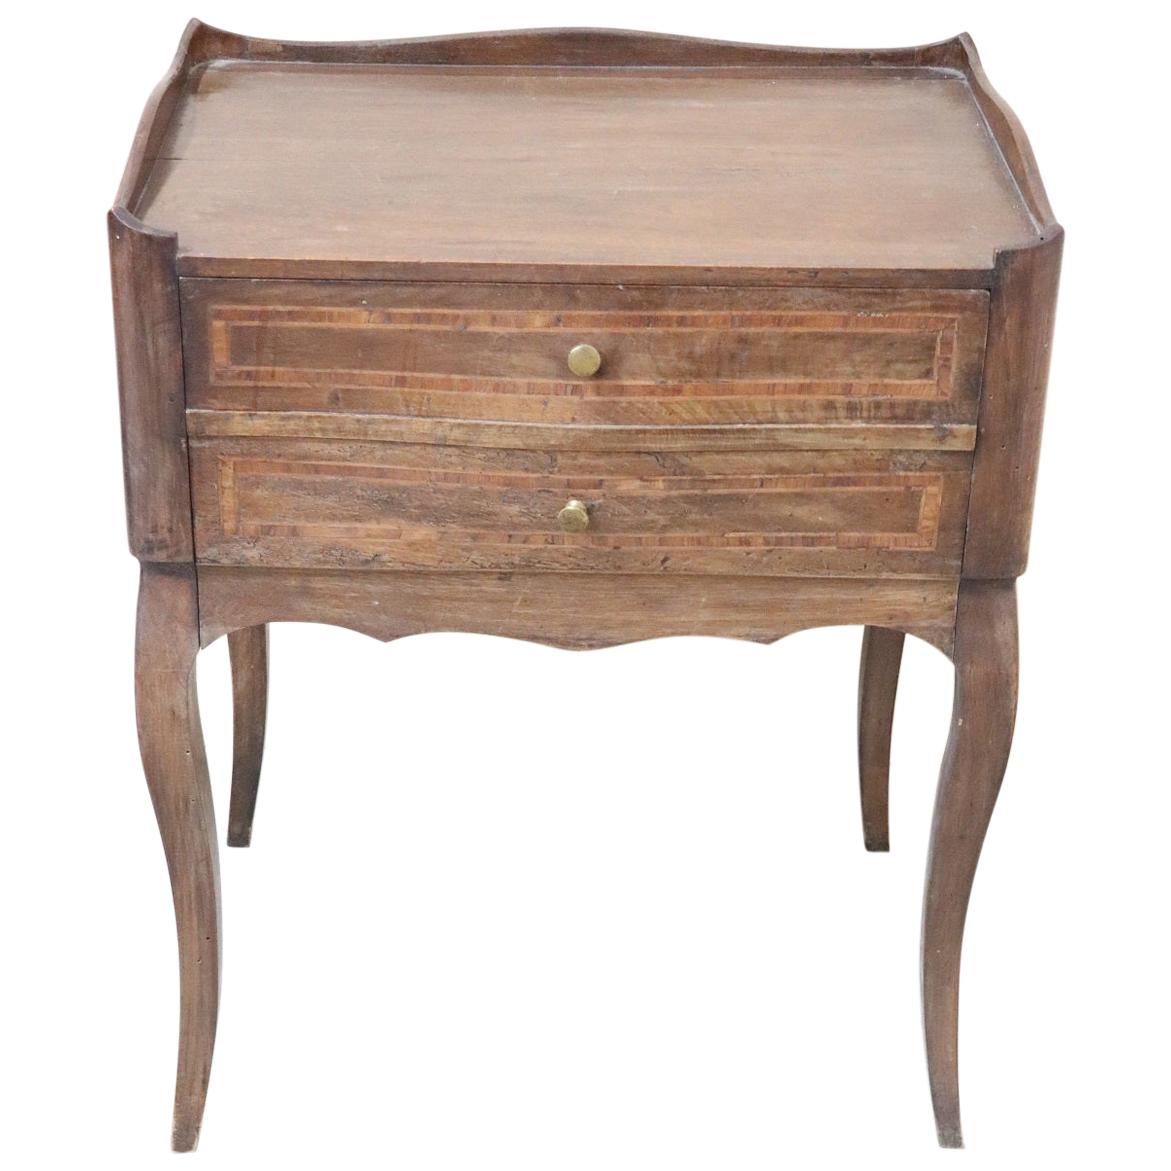 Italian Louis XV Style Inlaid Walnut Side Table or Nightstand